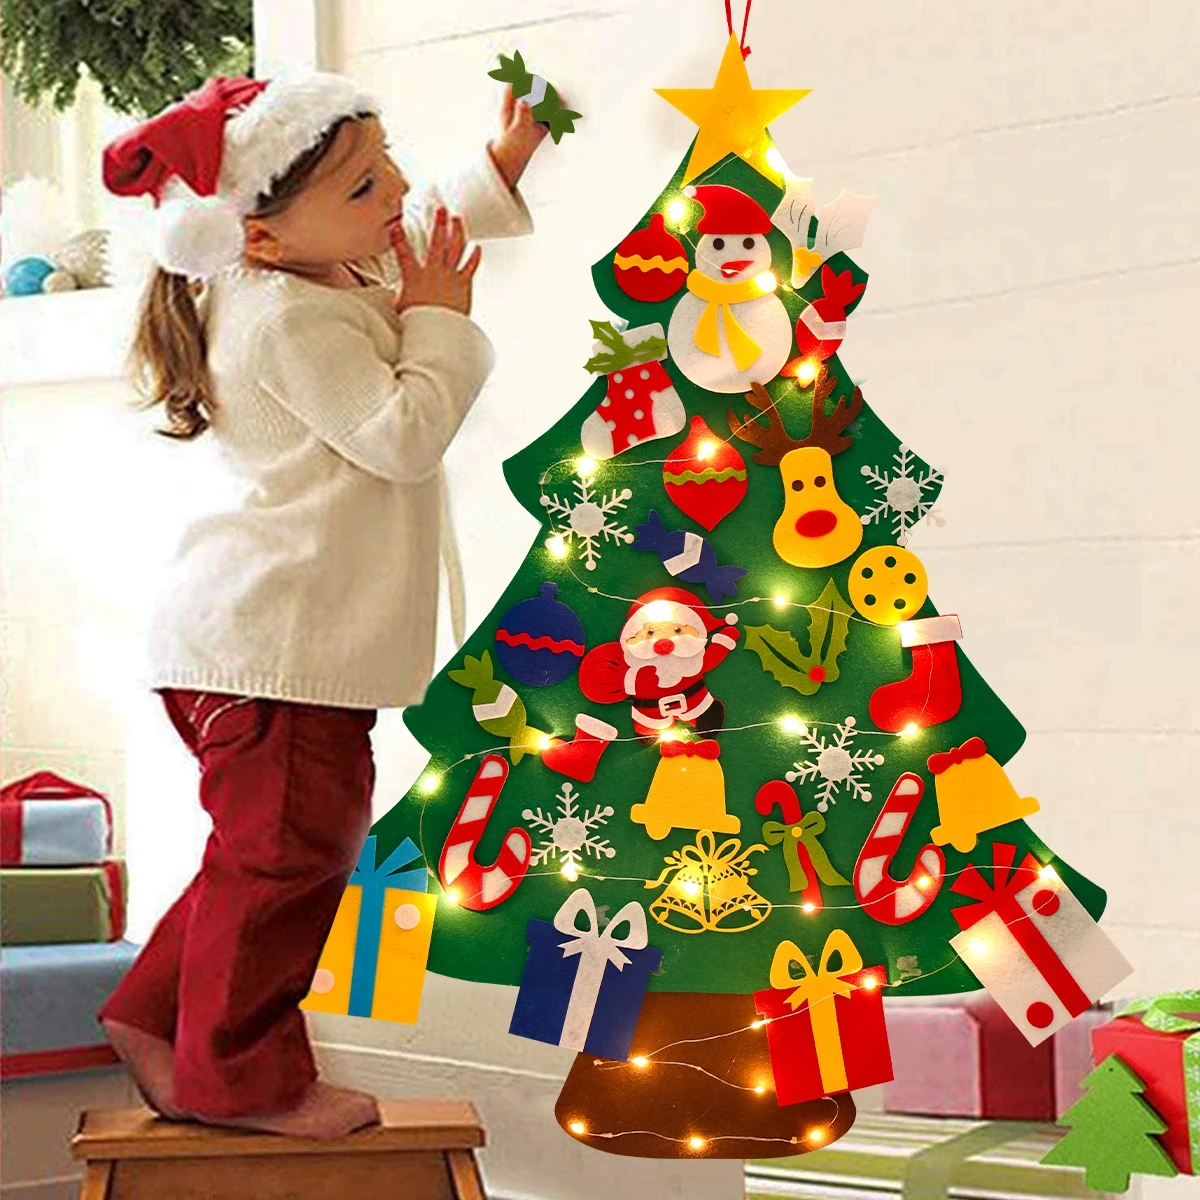 DIY Felt Christmas Tree 2023 Merry Christmas Decorations for Home Navidad Xmas Tree with Light Christmas Ornaments New Year Gift